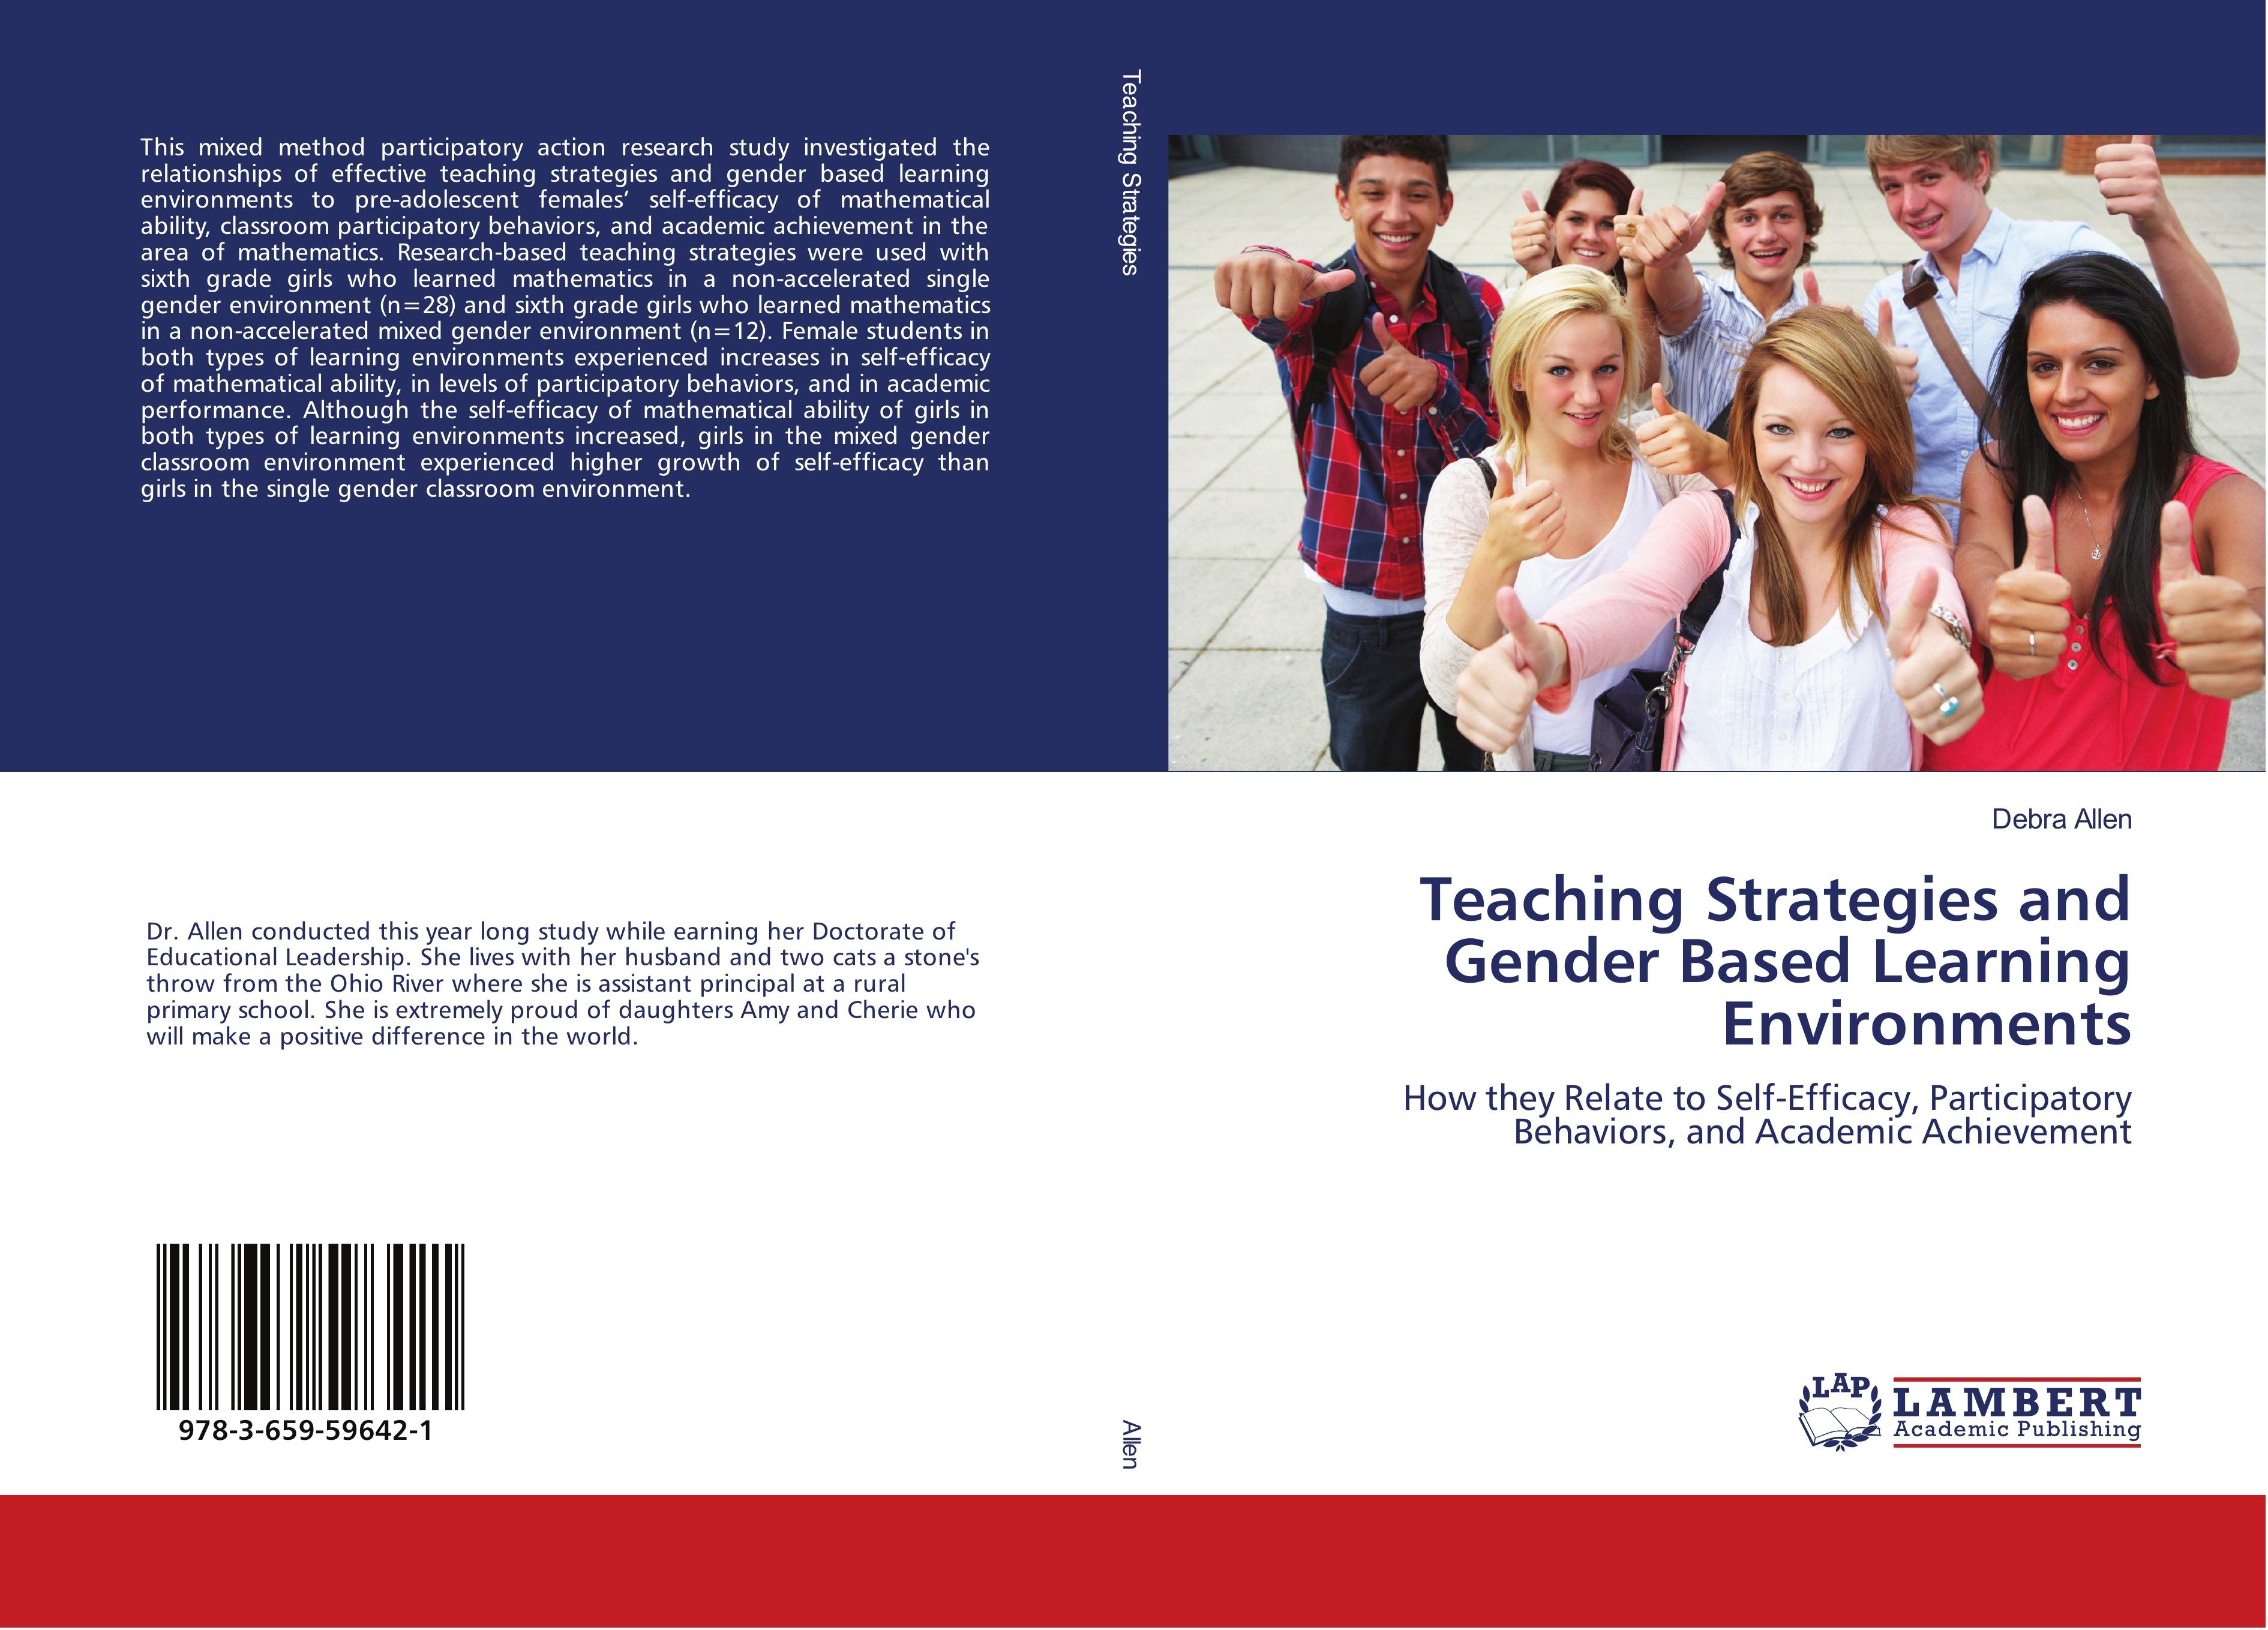 Teaching Strategies and Gender Based Learning Environments - Debra Allen